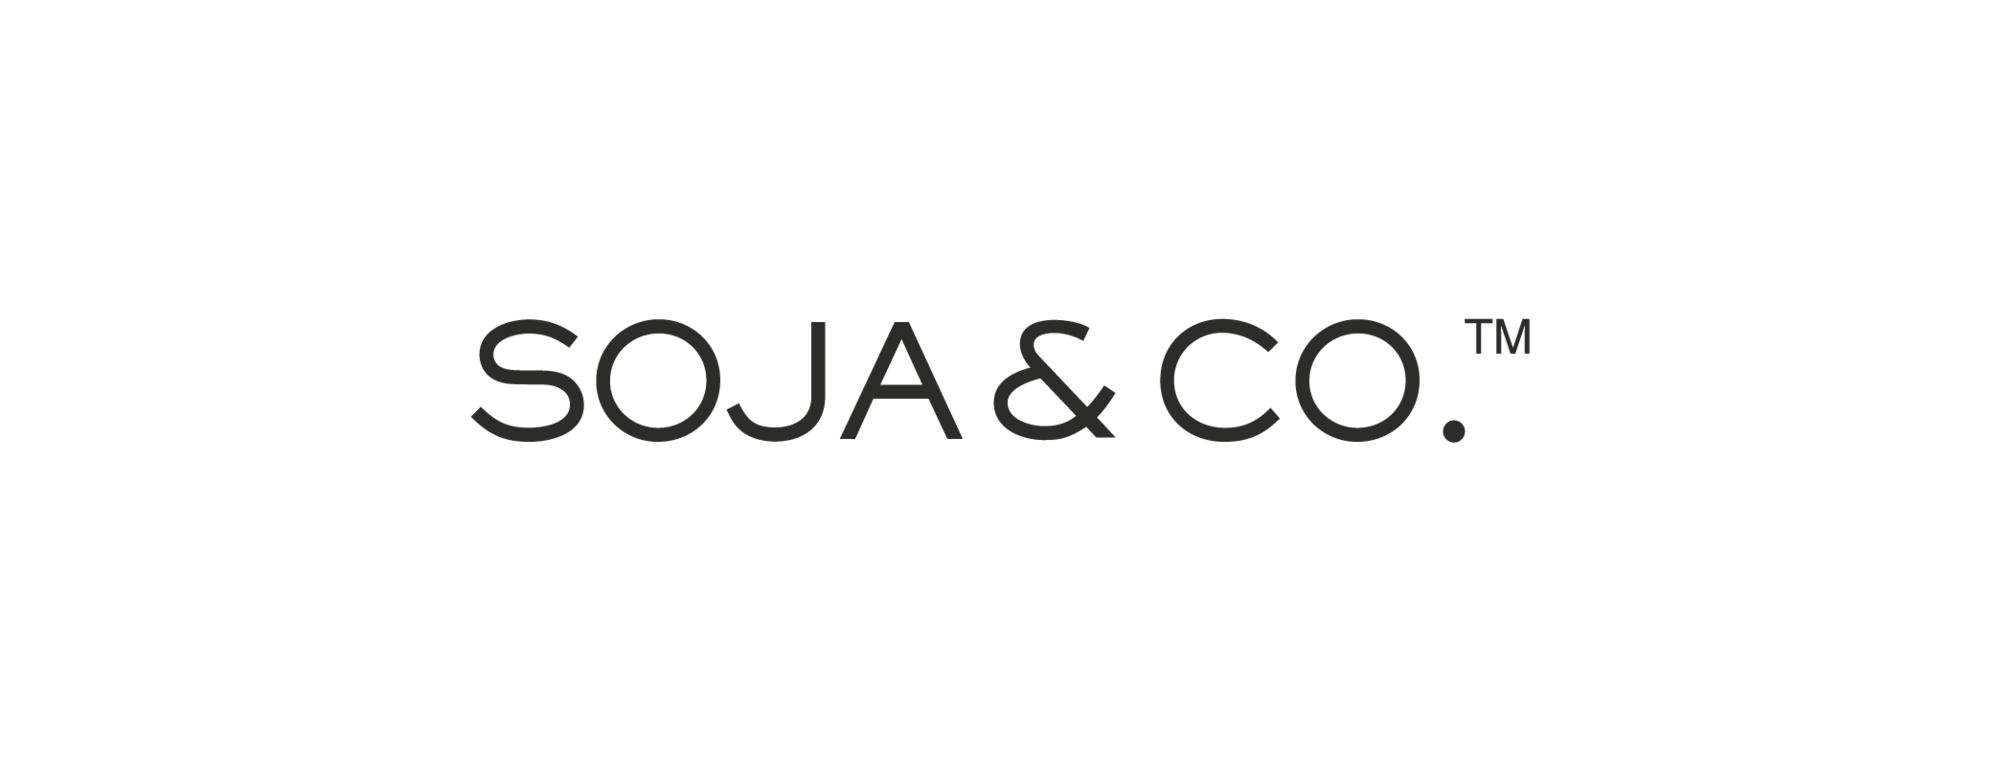 SOJA&CO Ressources-Logos Horizontal-Charcoal (2)